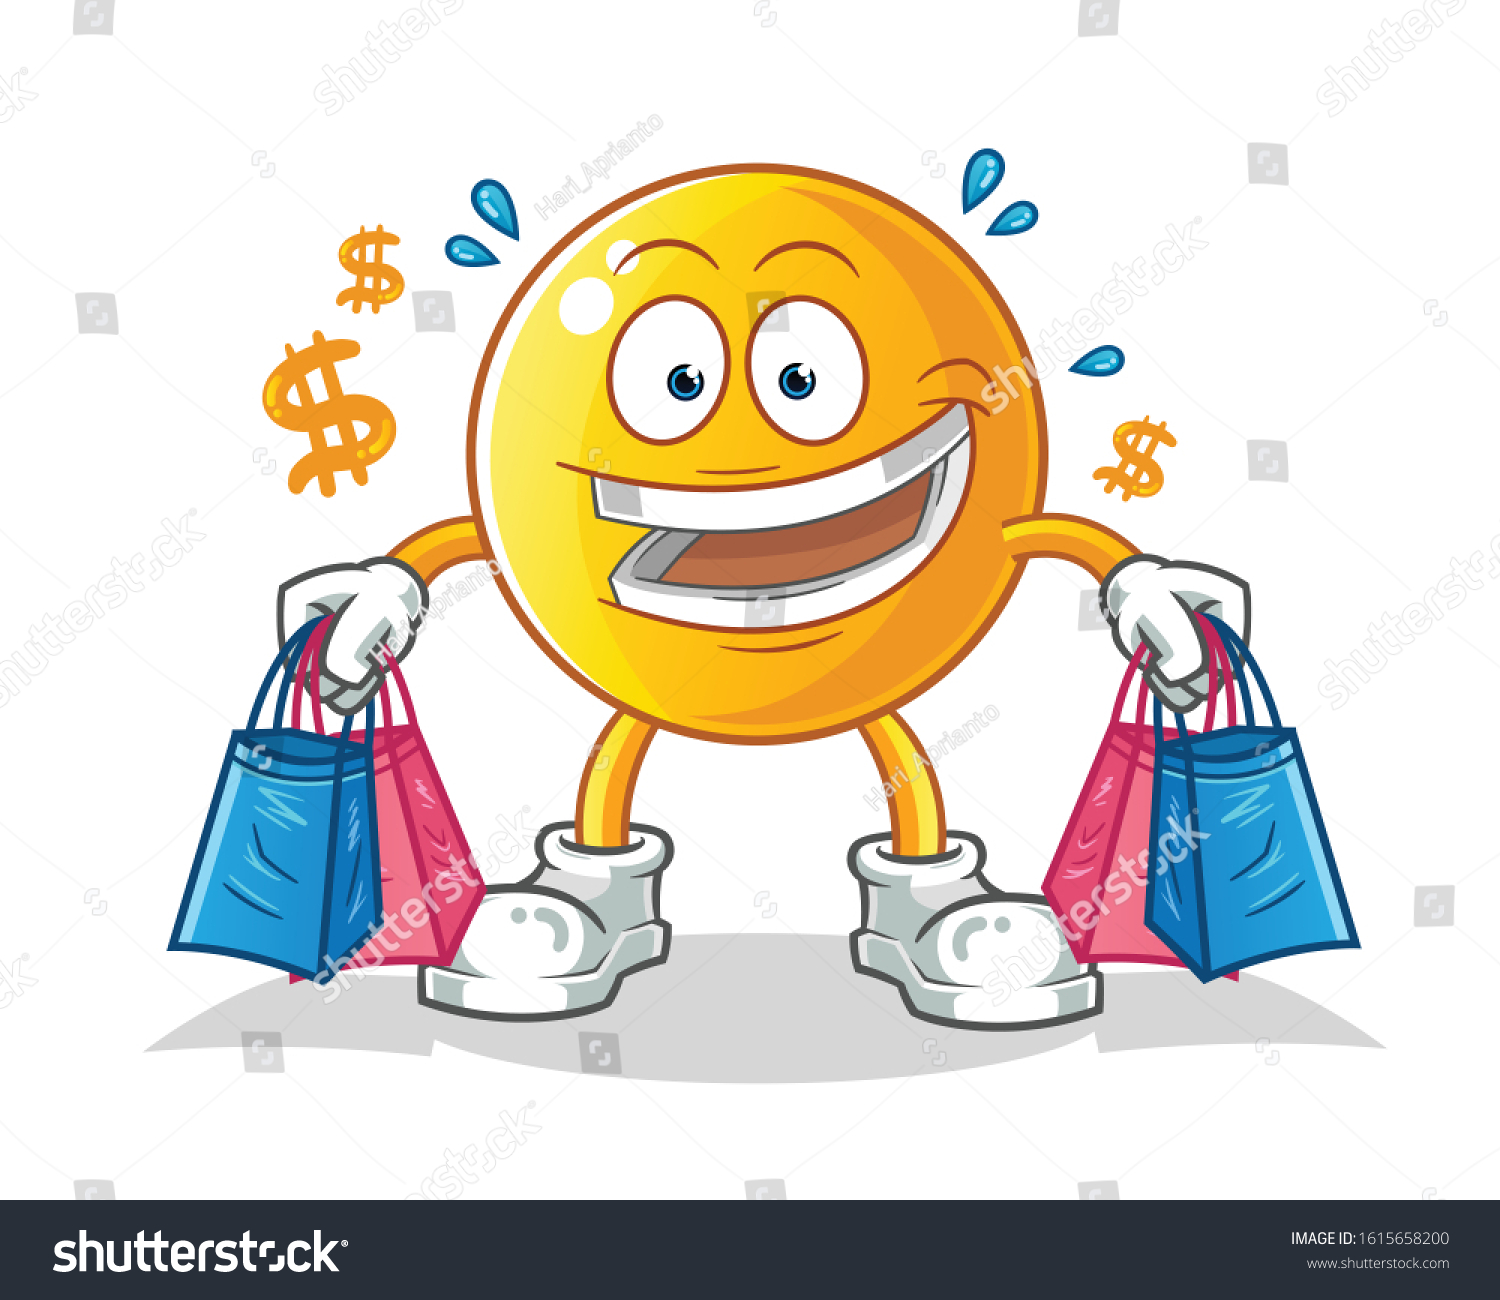 SVG of emoticon emoji shopping and holding shopping bags cartoon. cartoon mascot vector svg